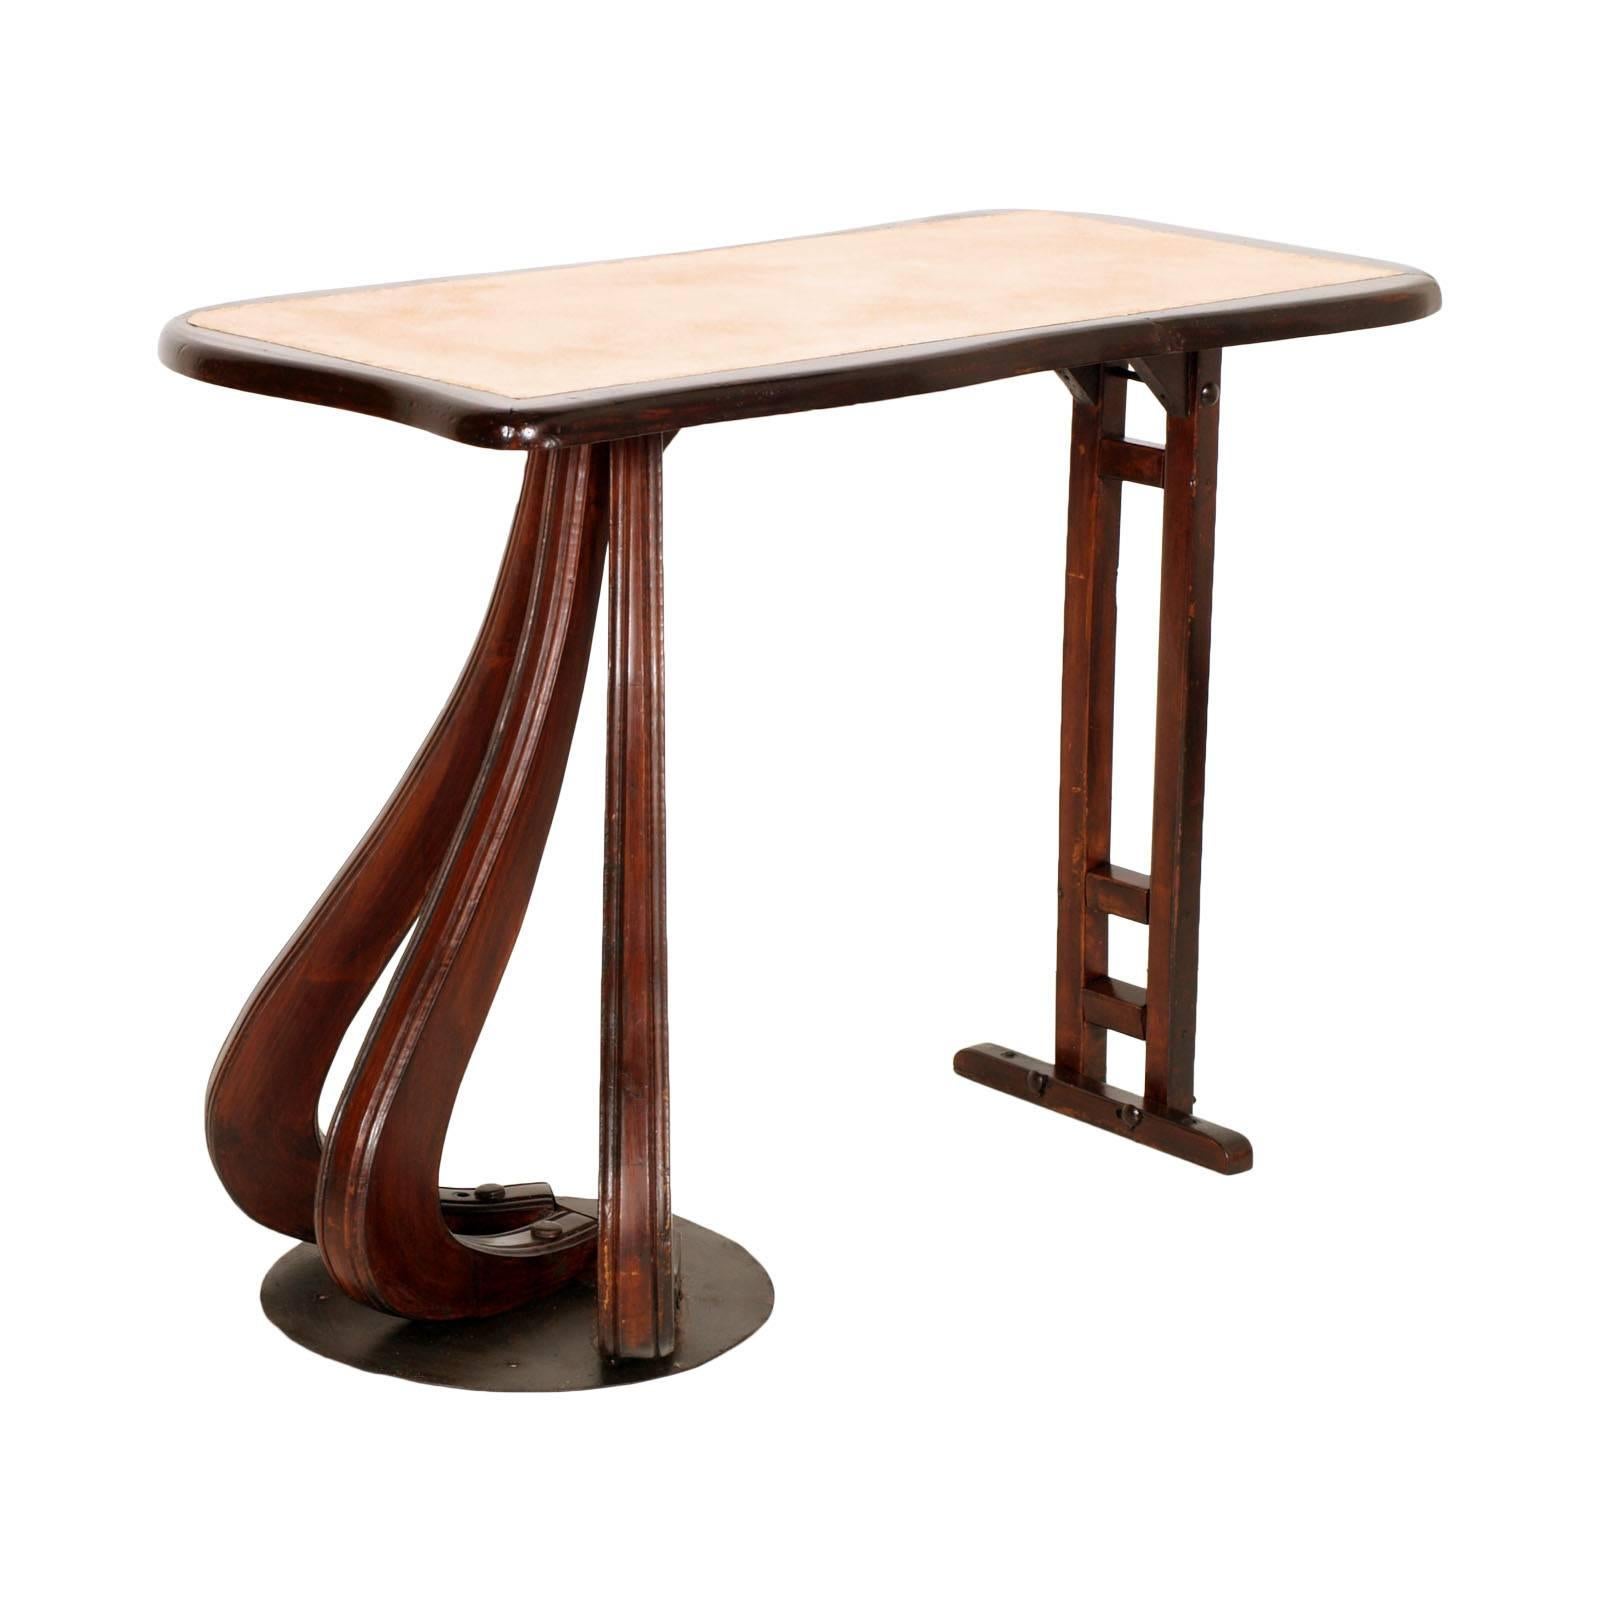 Ulrich or Carlo Mollino style side occasional Table, shelf , console, in walnut